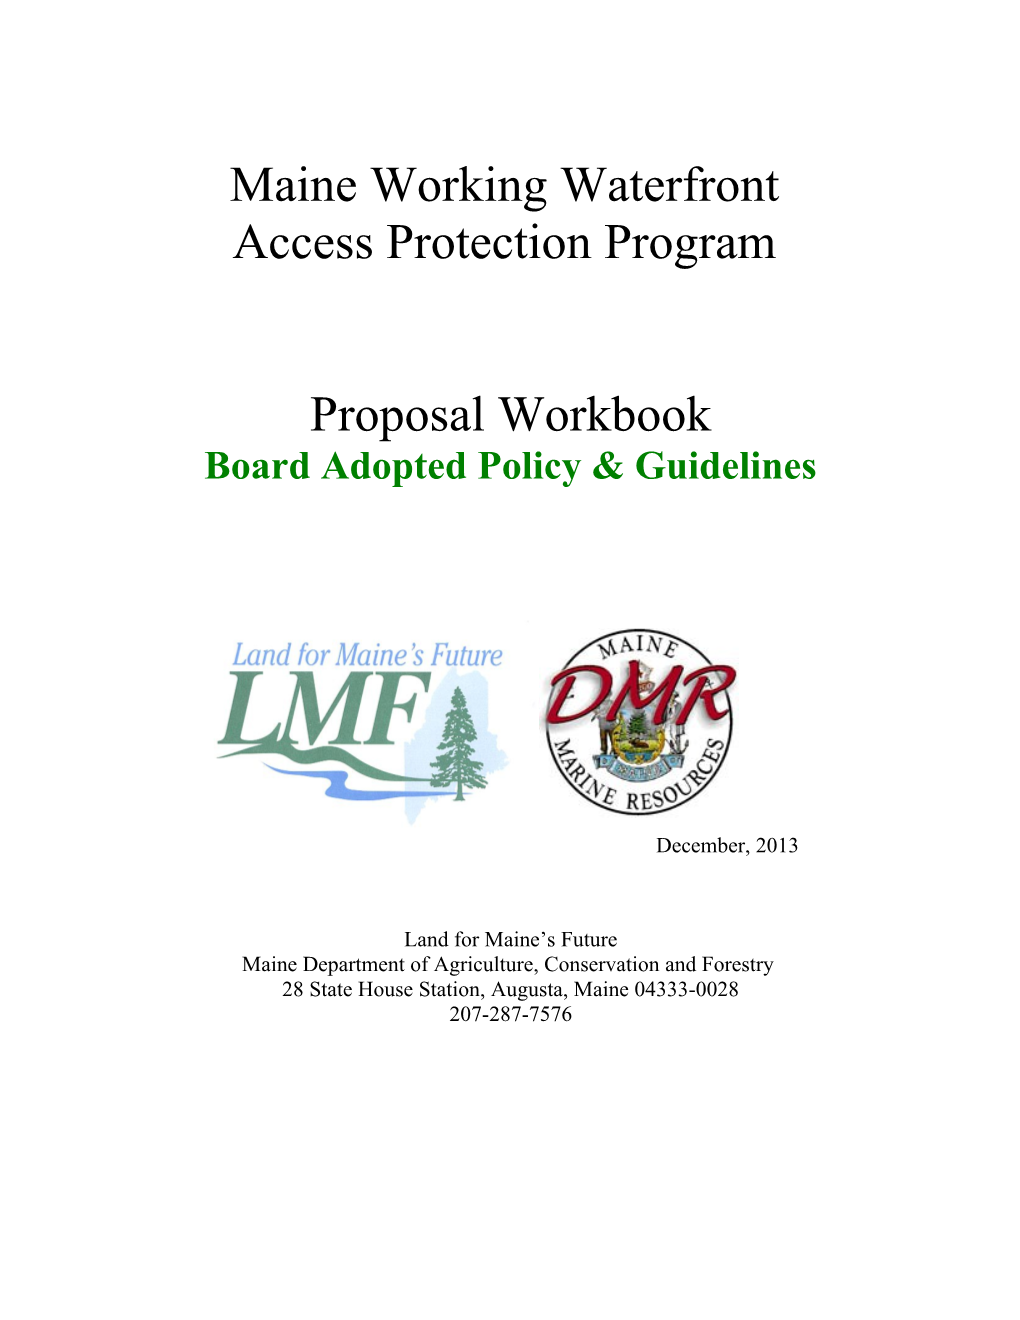 Land for Maine S Future Program